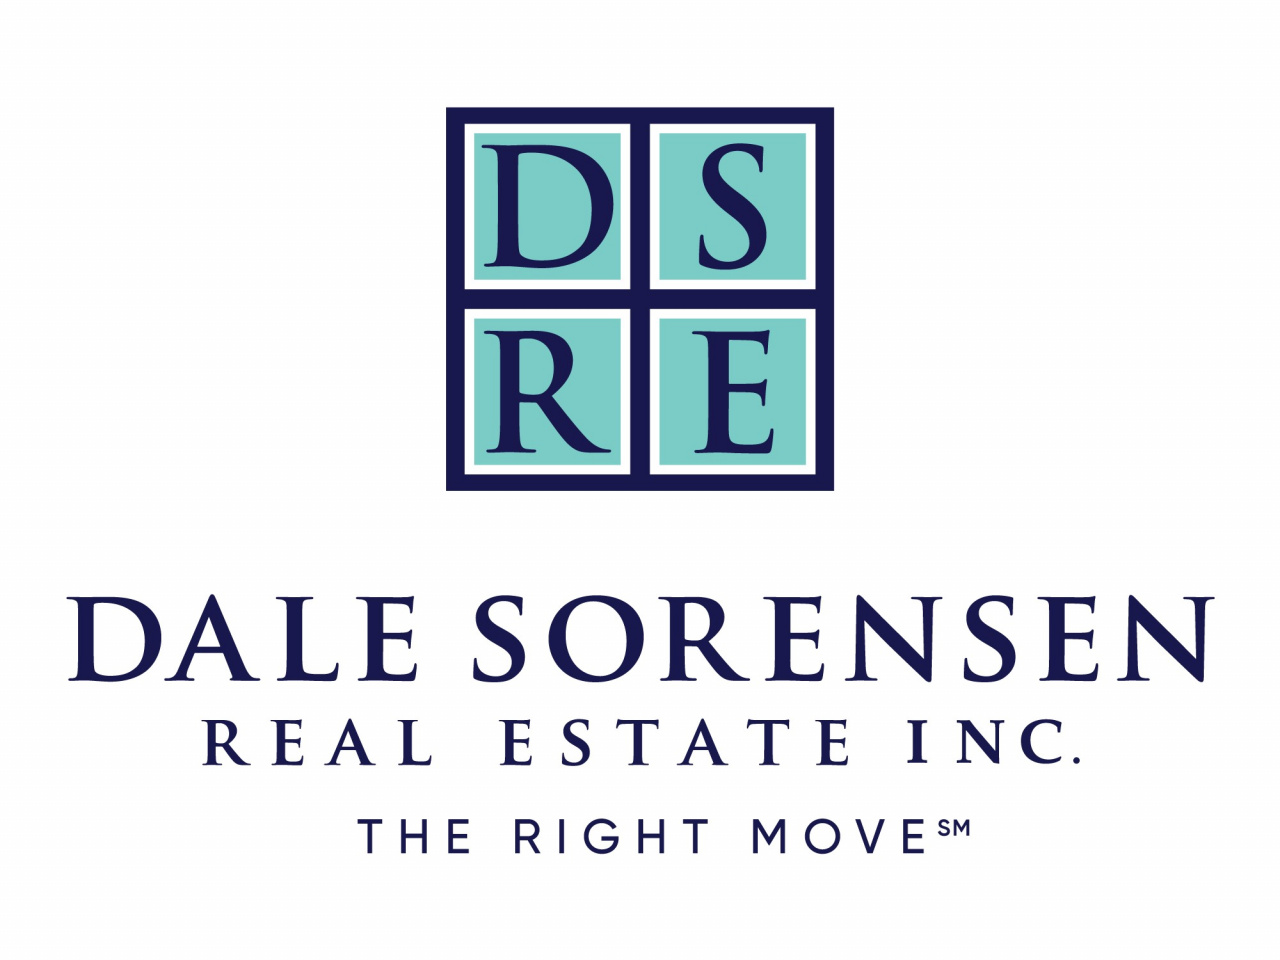 Dale Sorensen Real Estate Inc.